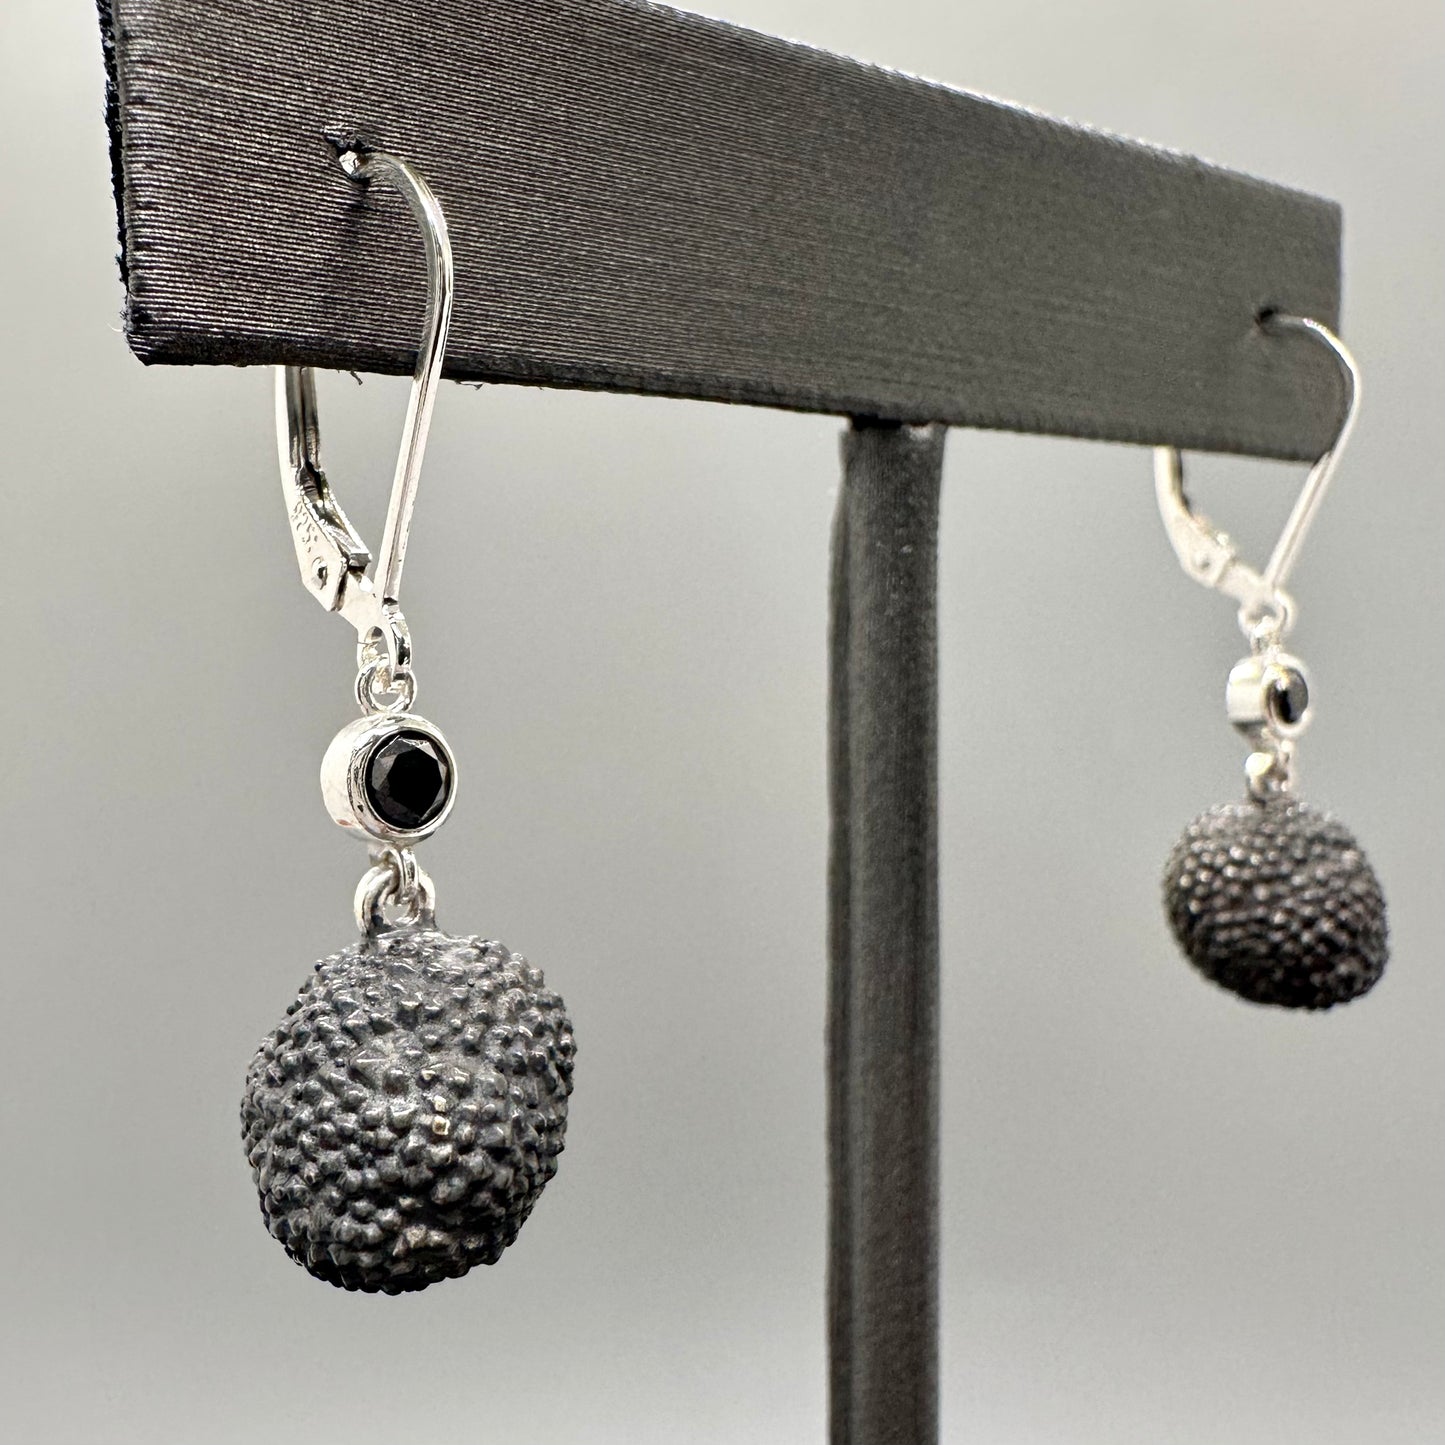 The black diamond truffle earrings